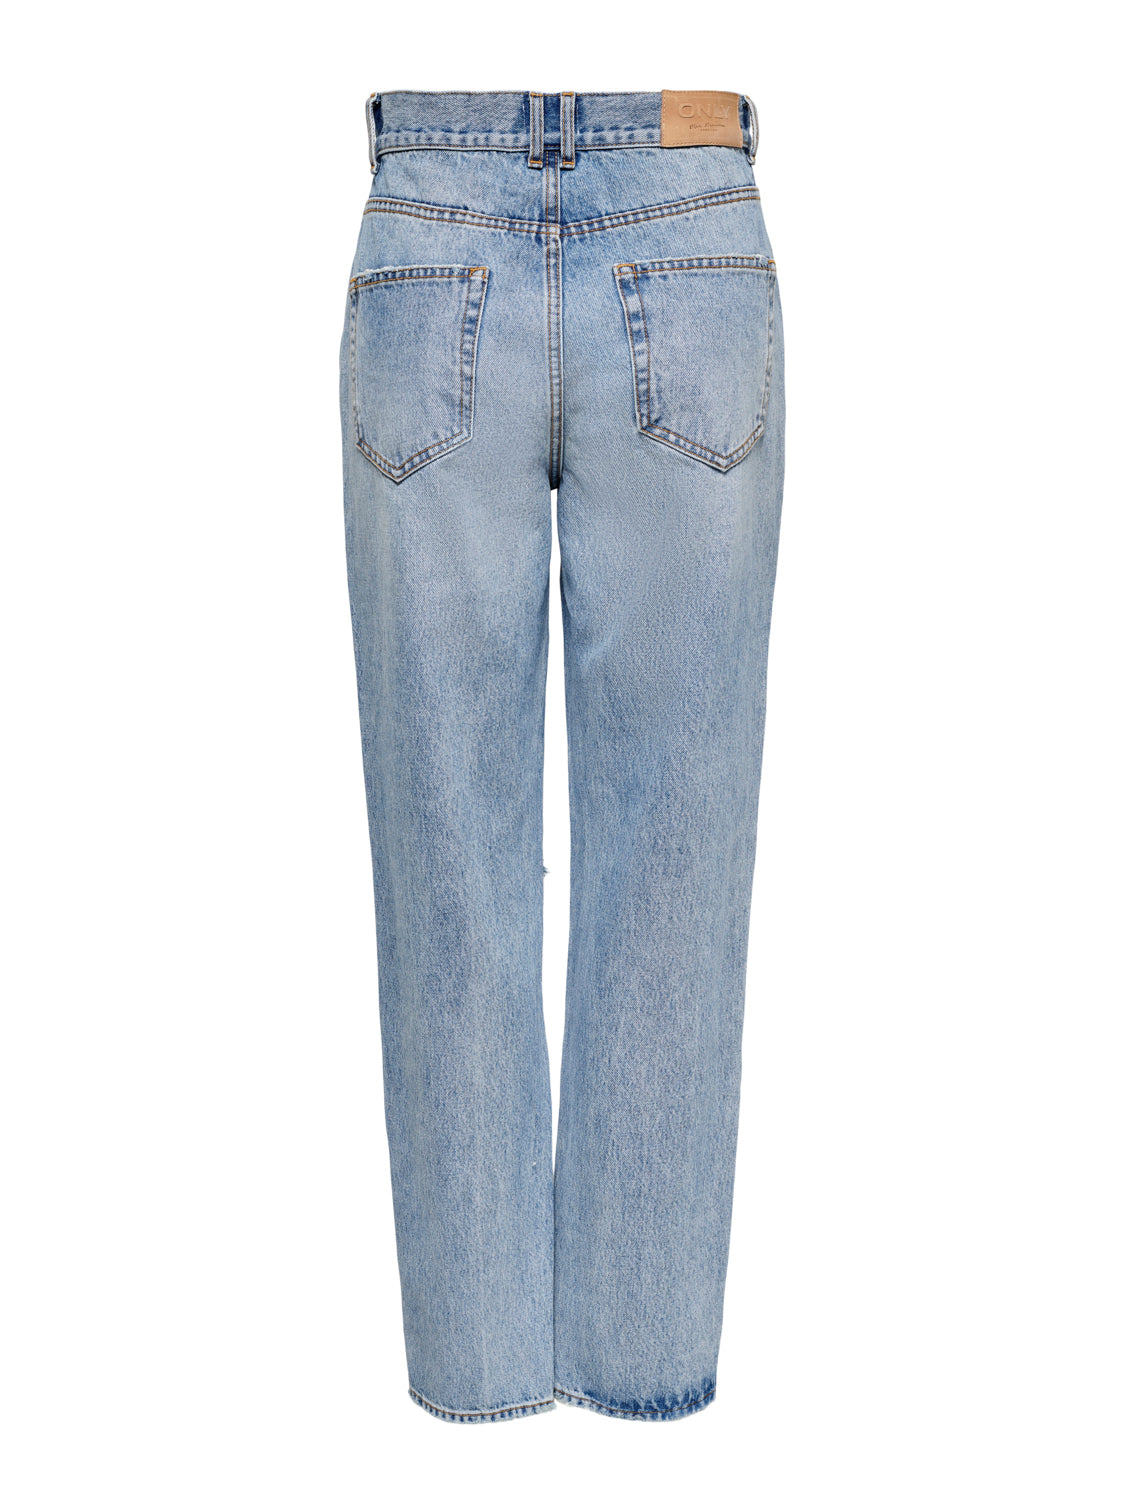 ONLROBYN Jeans - Medium Blue Denim